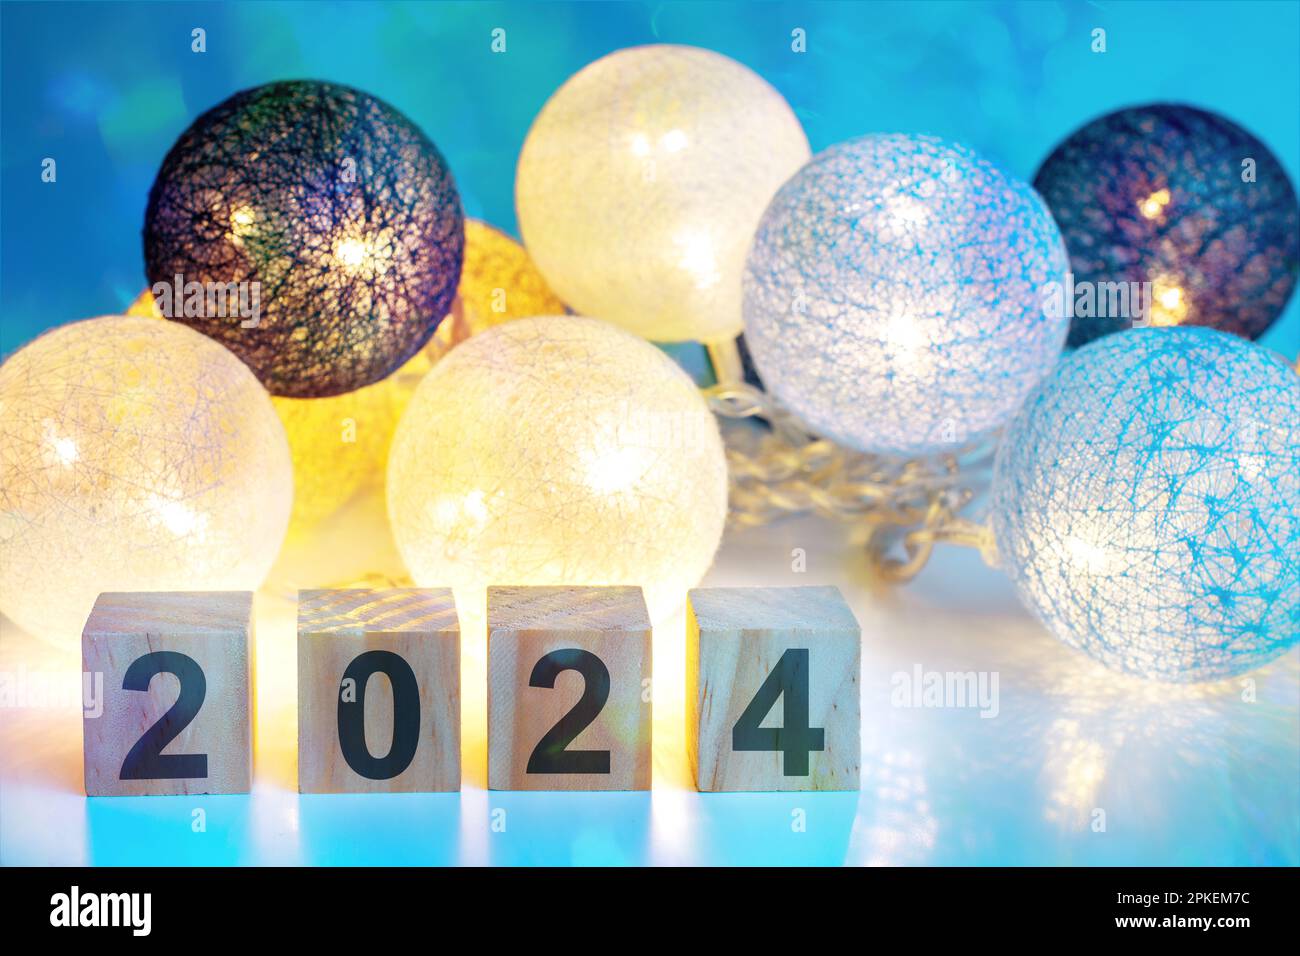 La balle magique volante (orbi ball), cadeau tendance de Noël 2024